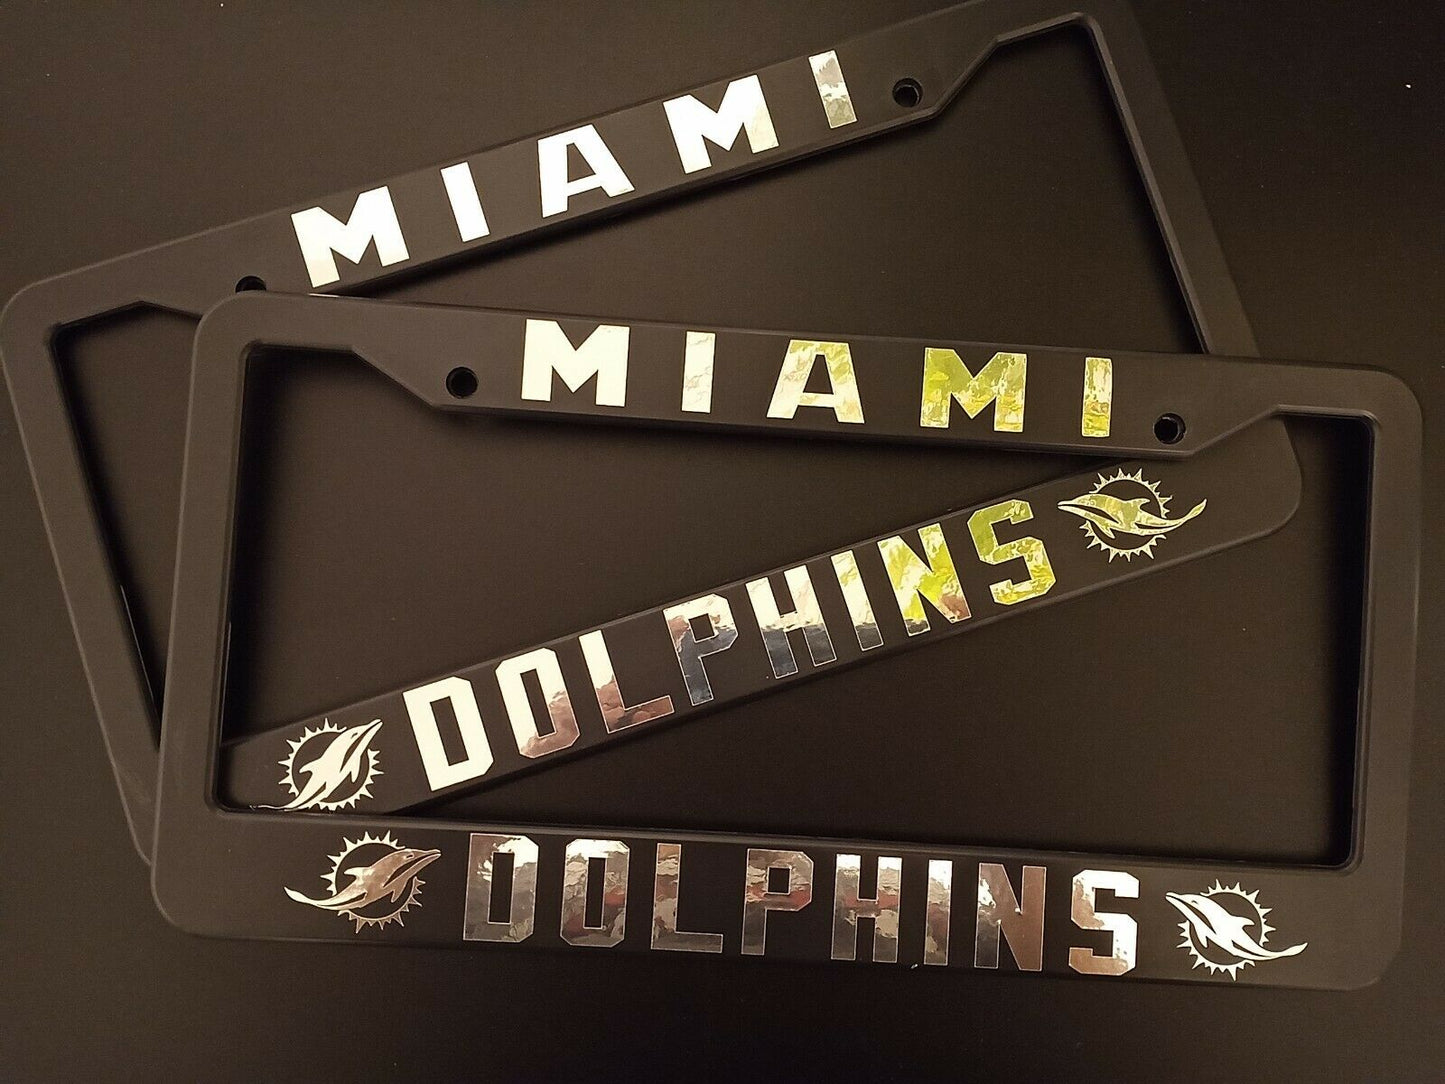 Set of 2 Miami Dolphins Plastic or Aluminum Car License Plate Frames Black Truck Parts Vehicle Accessories Auto Decor